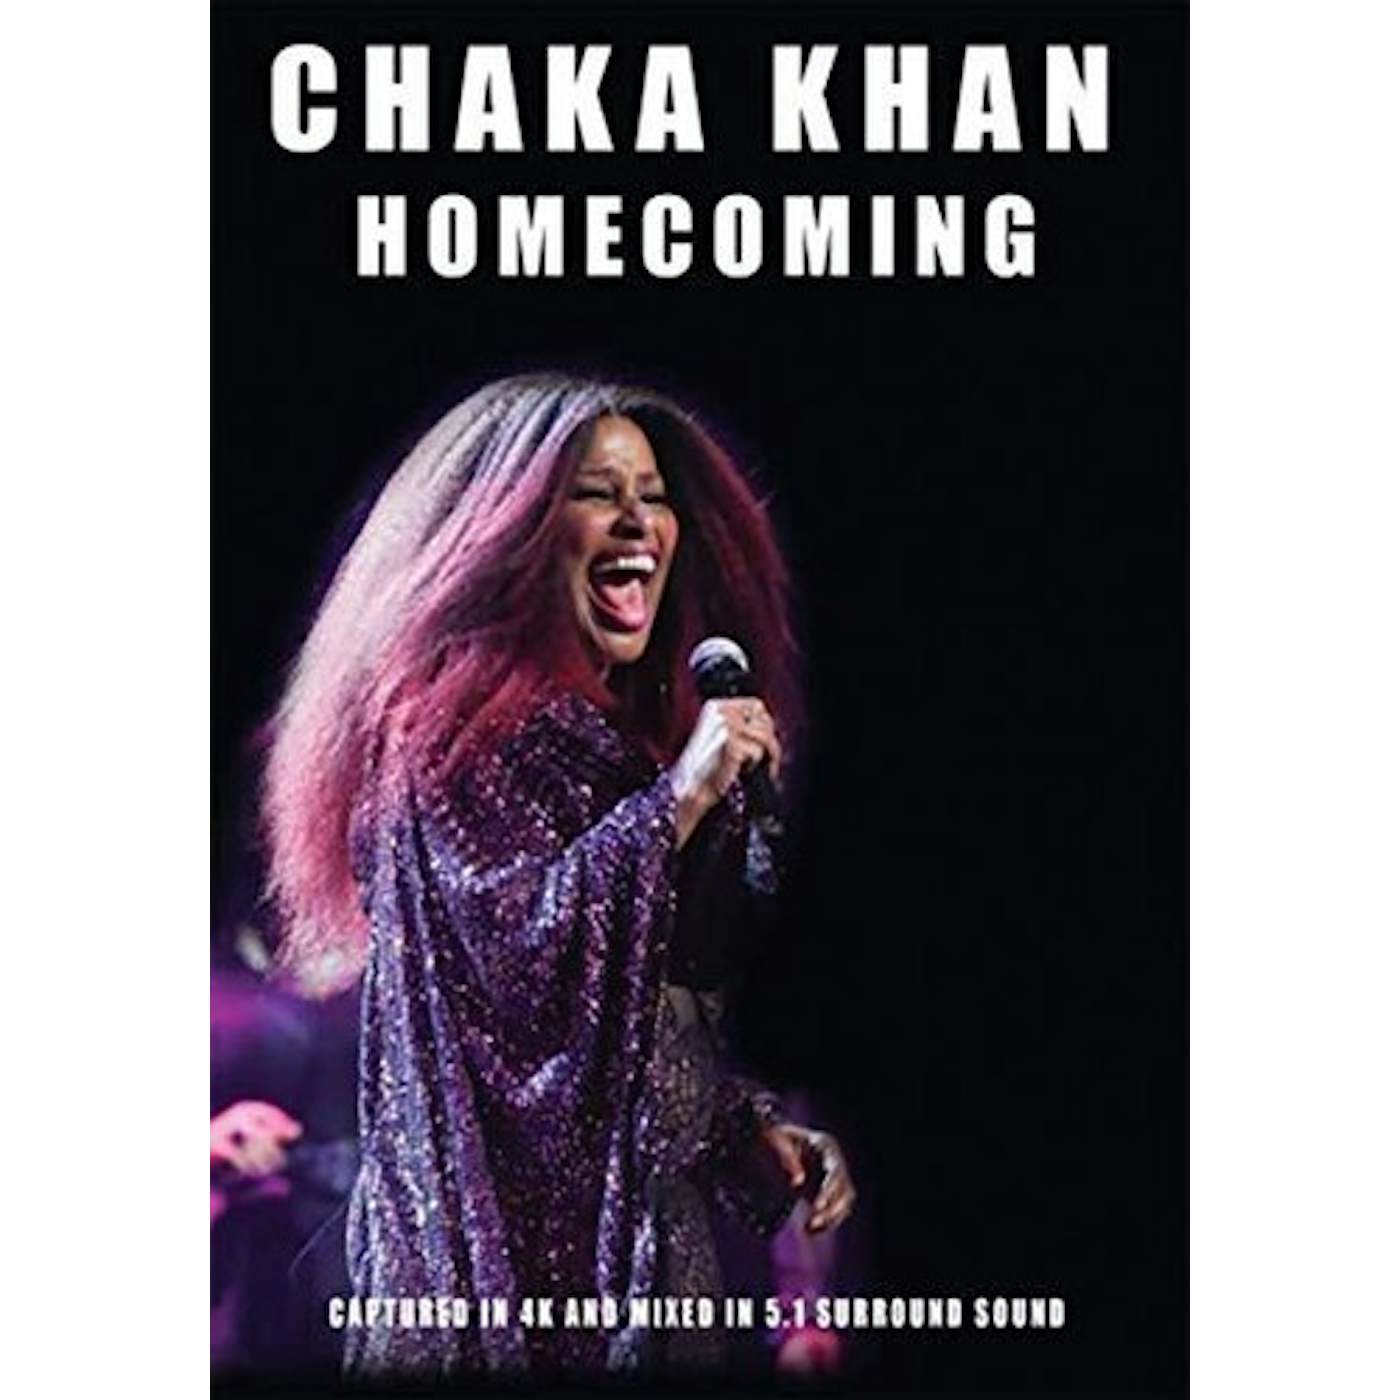 Chaka Khan HOMECOMING DVD